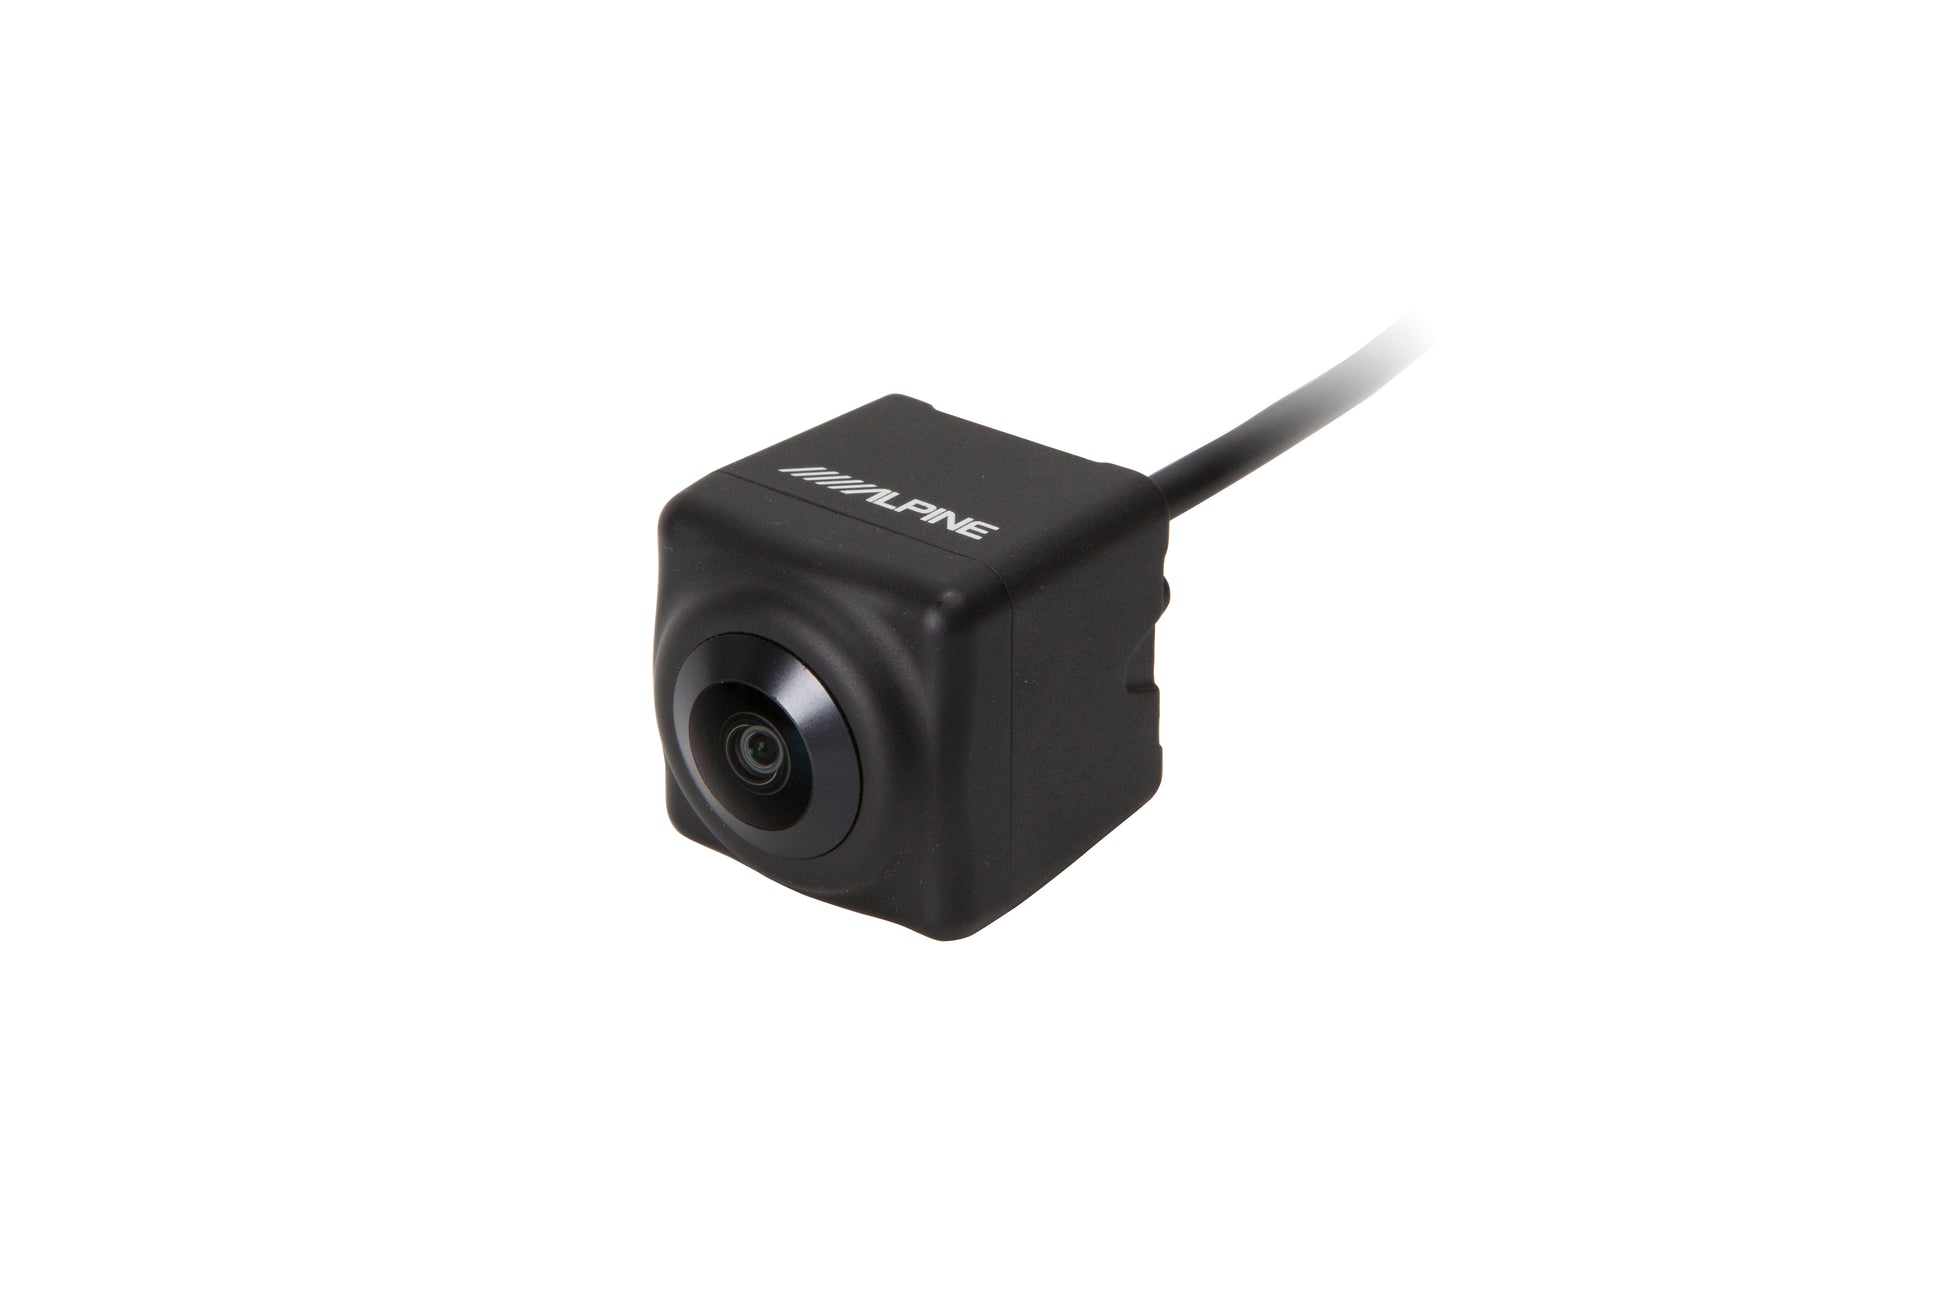 Alpine Multi-View HDR Front Camera (HCE-C2600FD)